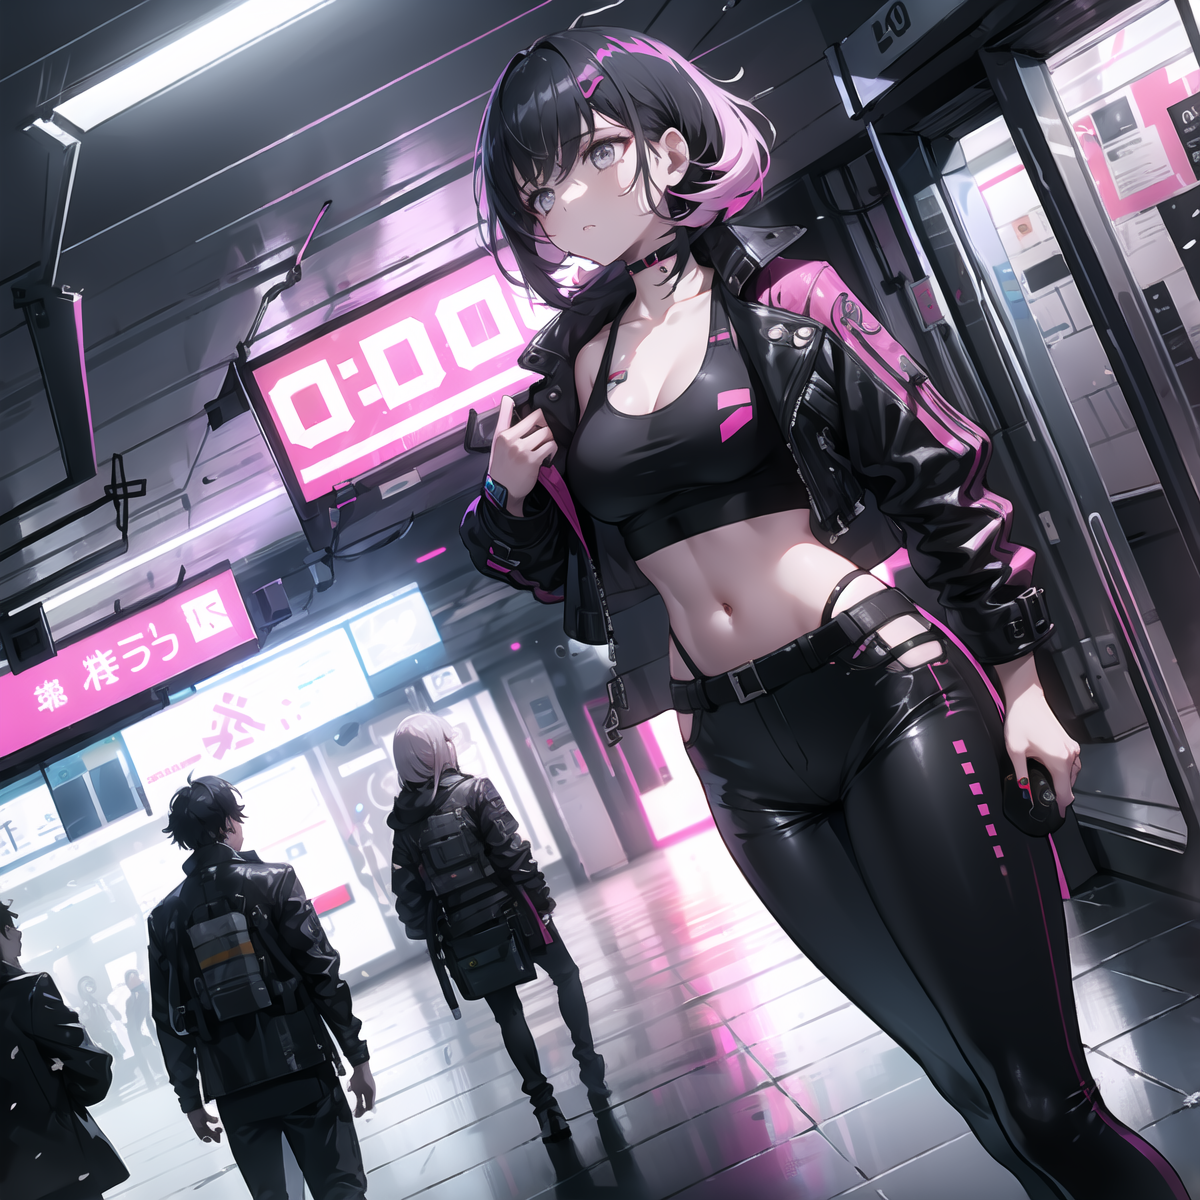 Pin by zdz on ✘ANIME✮MAGIX✘  Cyberpunk anime, Anime, Anime character design